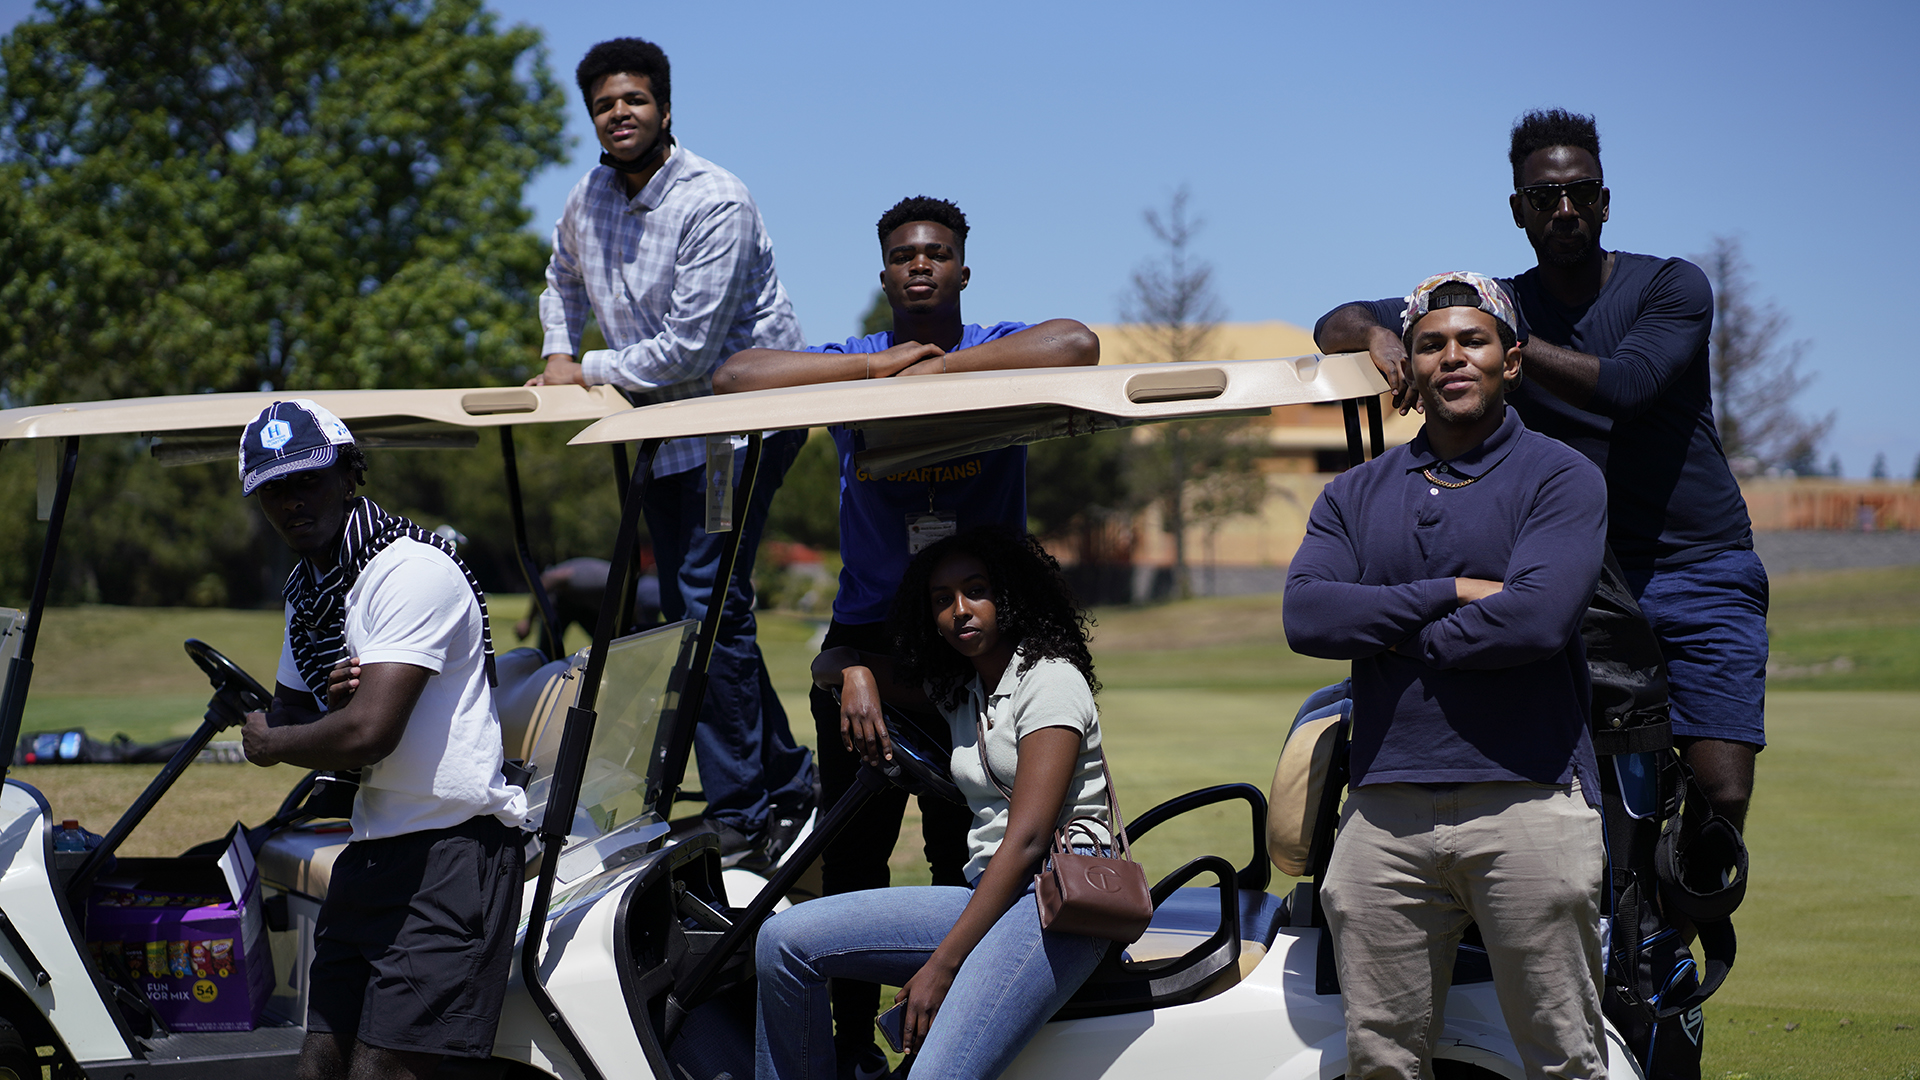 Students riding a golf cart.